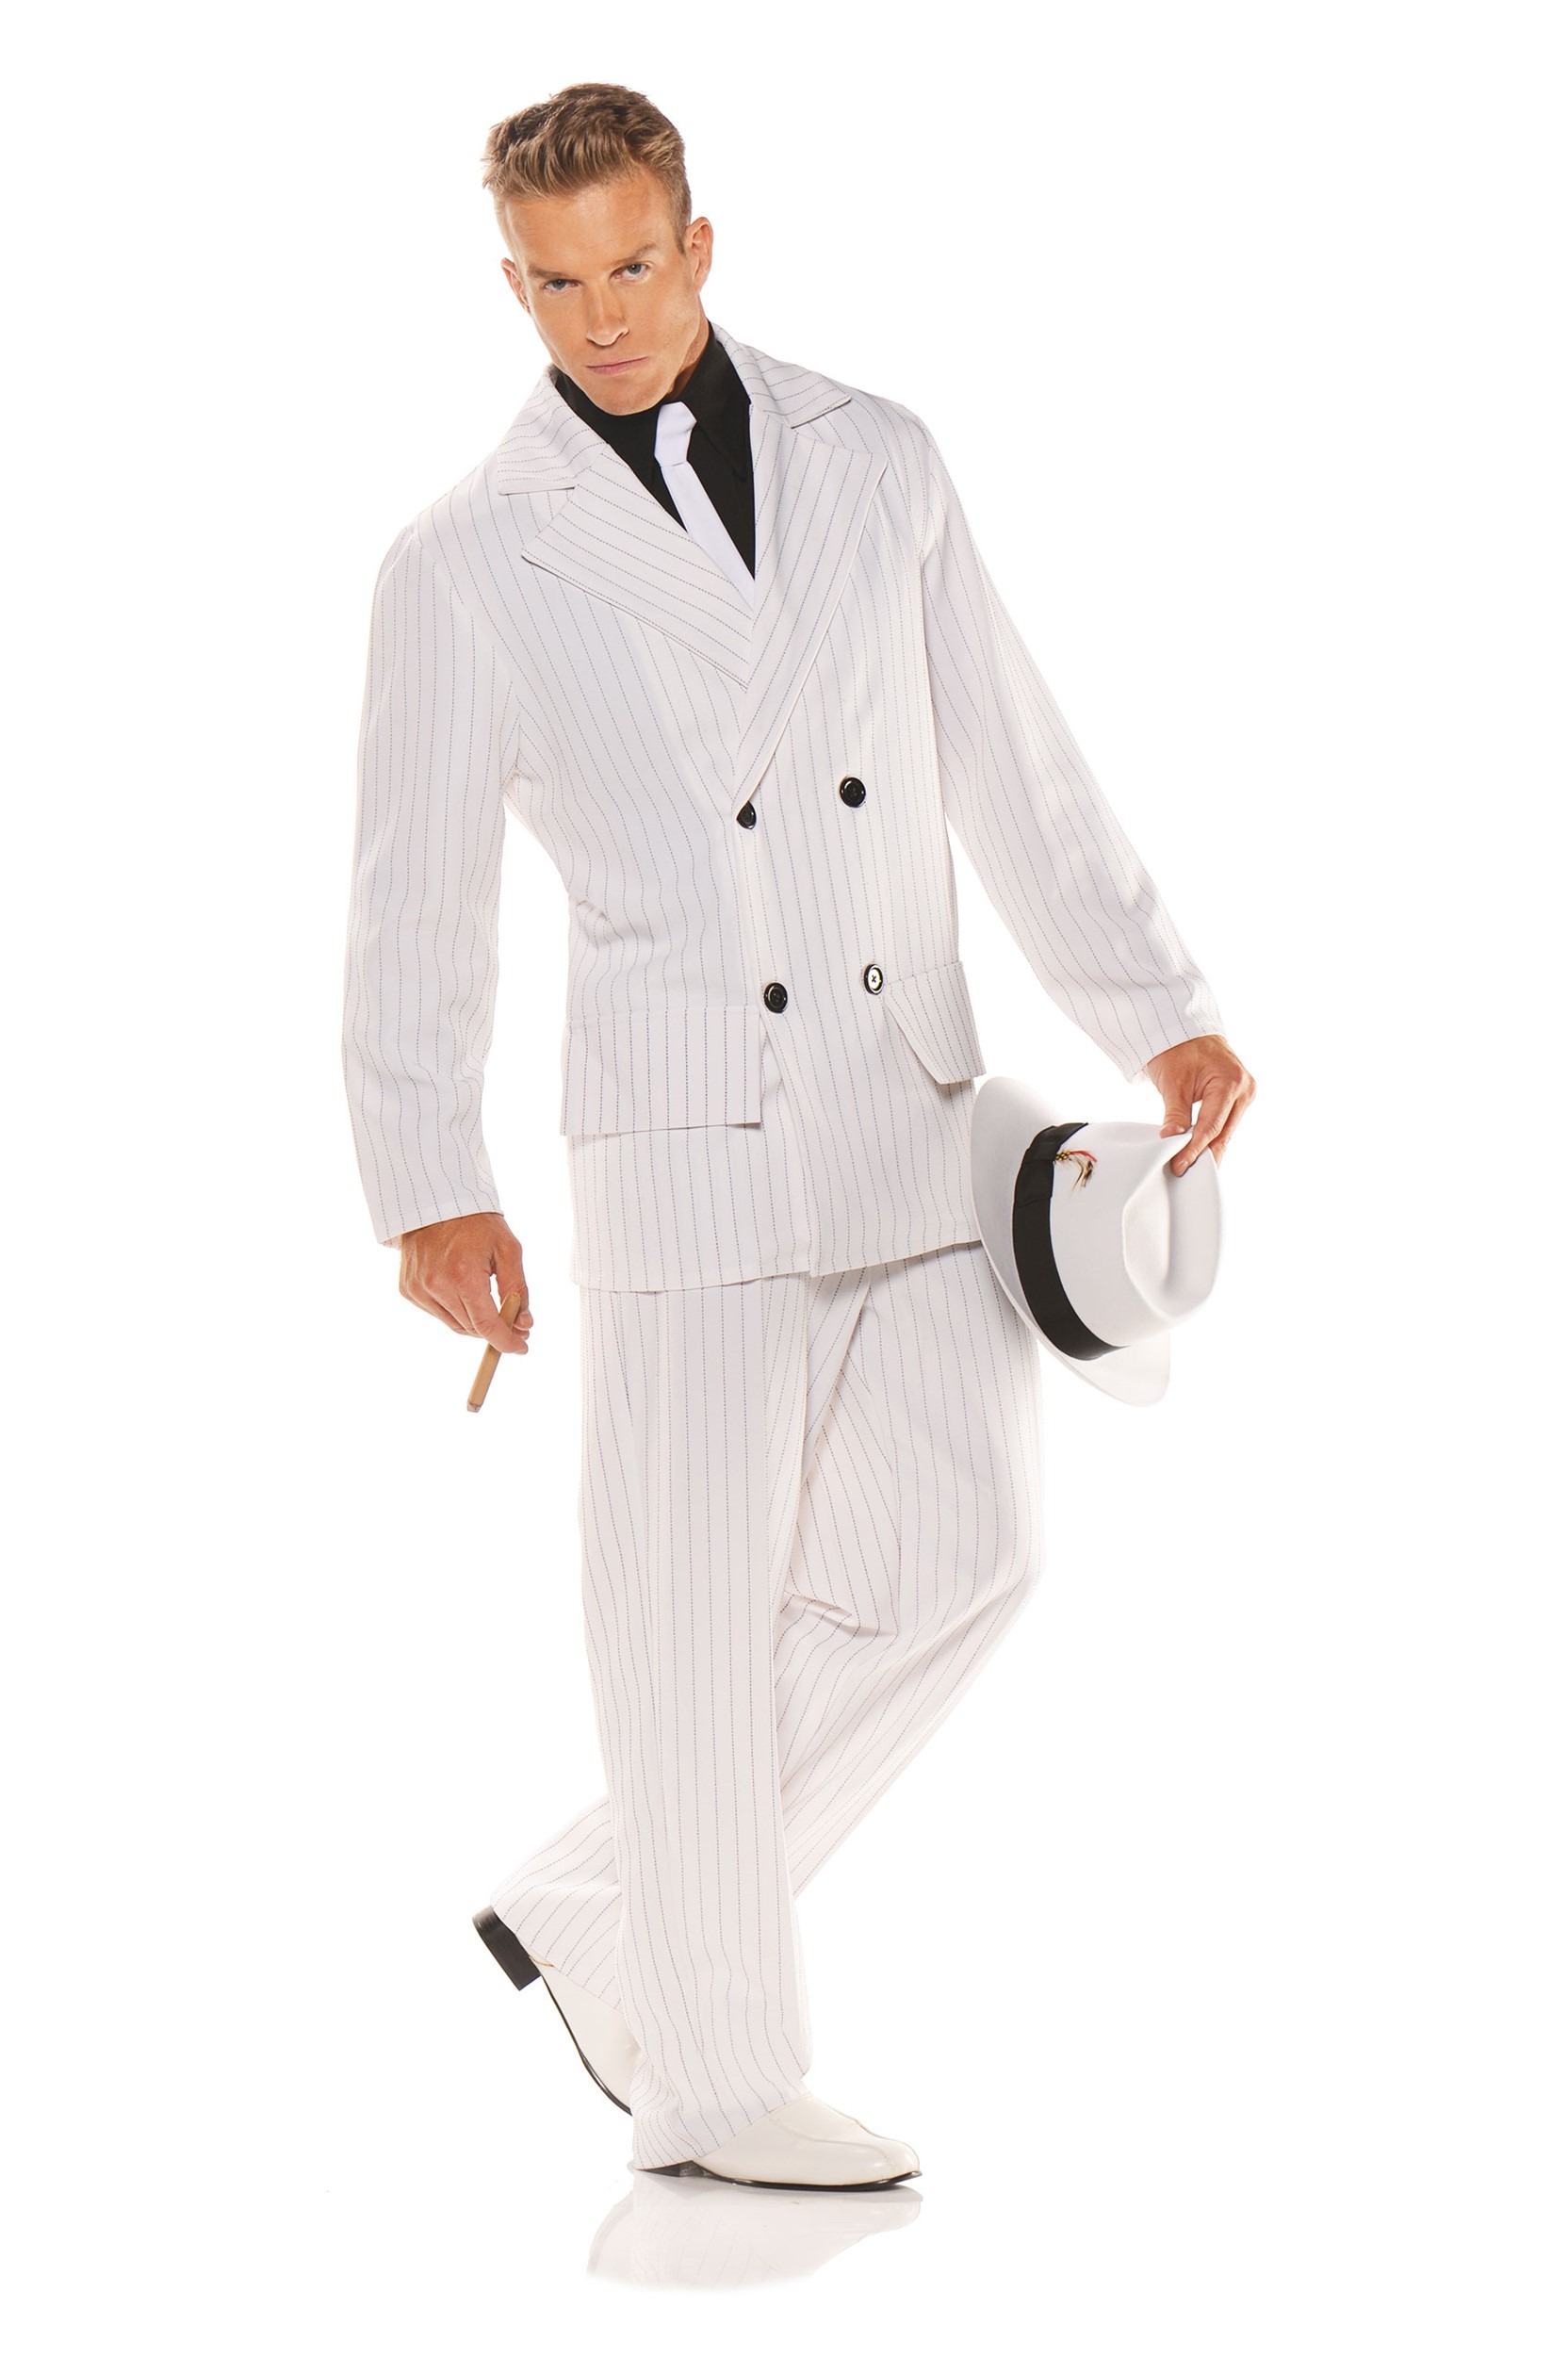 Women's Mafia Mob Gangsta Black/White Pinstriped Suit with Hat & Necktie  Halloween Costume, Assorted Sizes